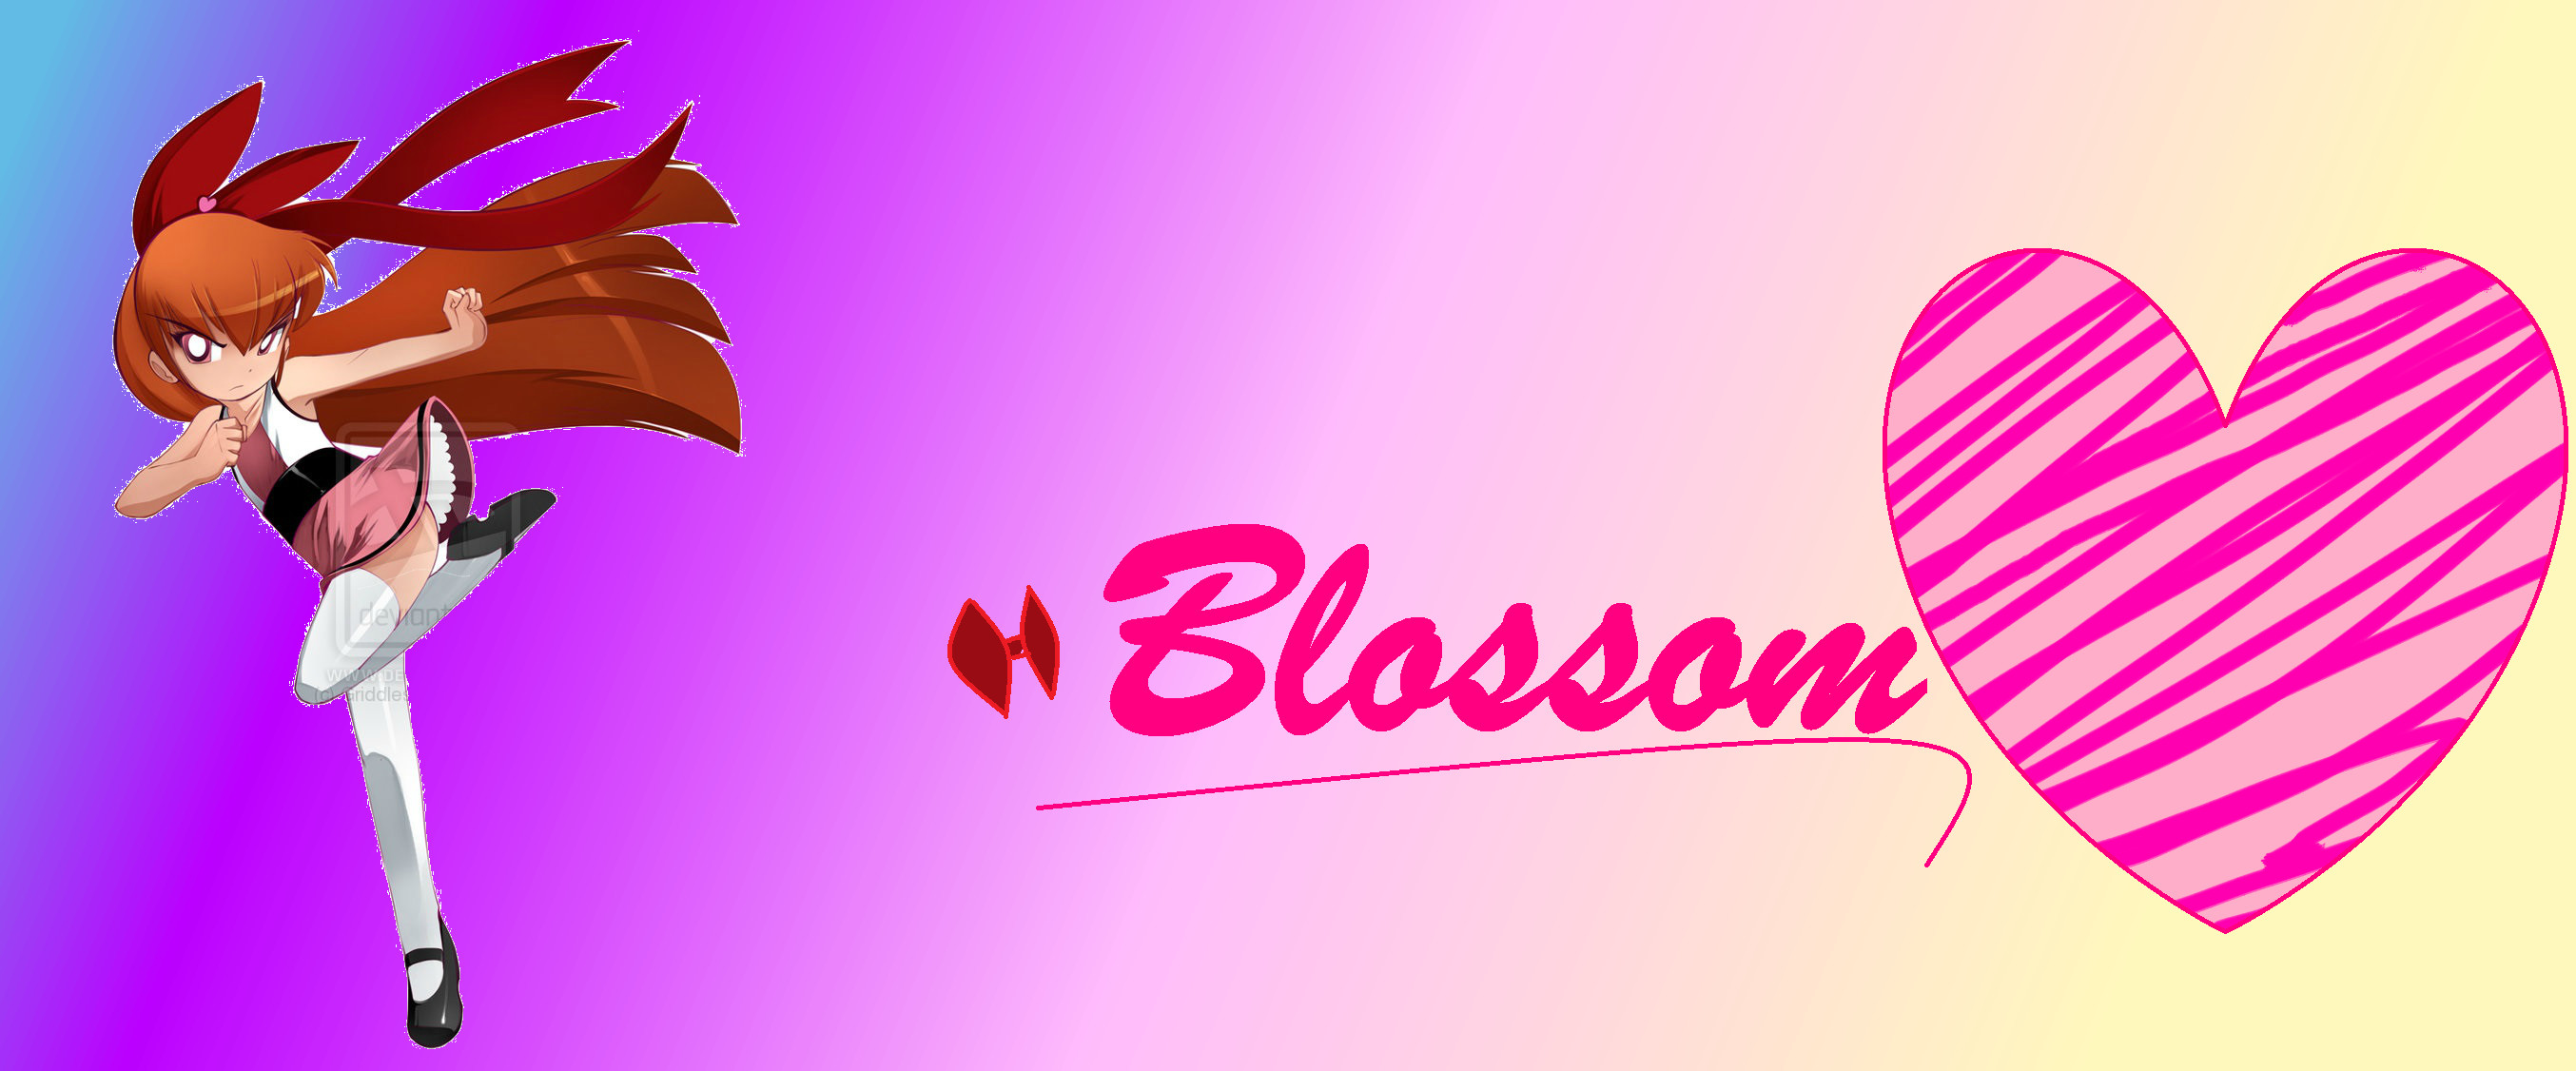 2708x1126 Blossom Wallpaper - Powerpuff Girls Fusion Fall Photo (36119573 .